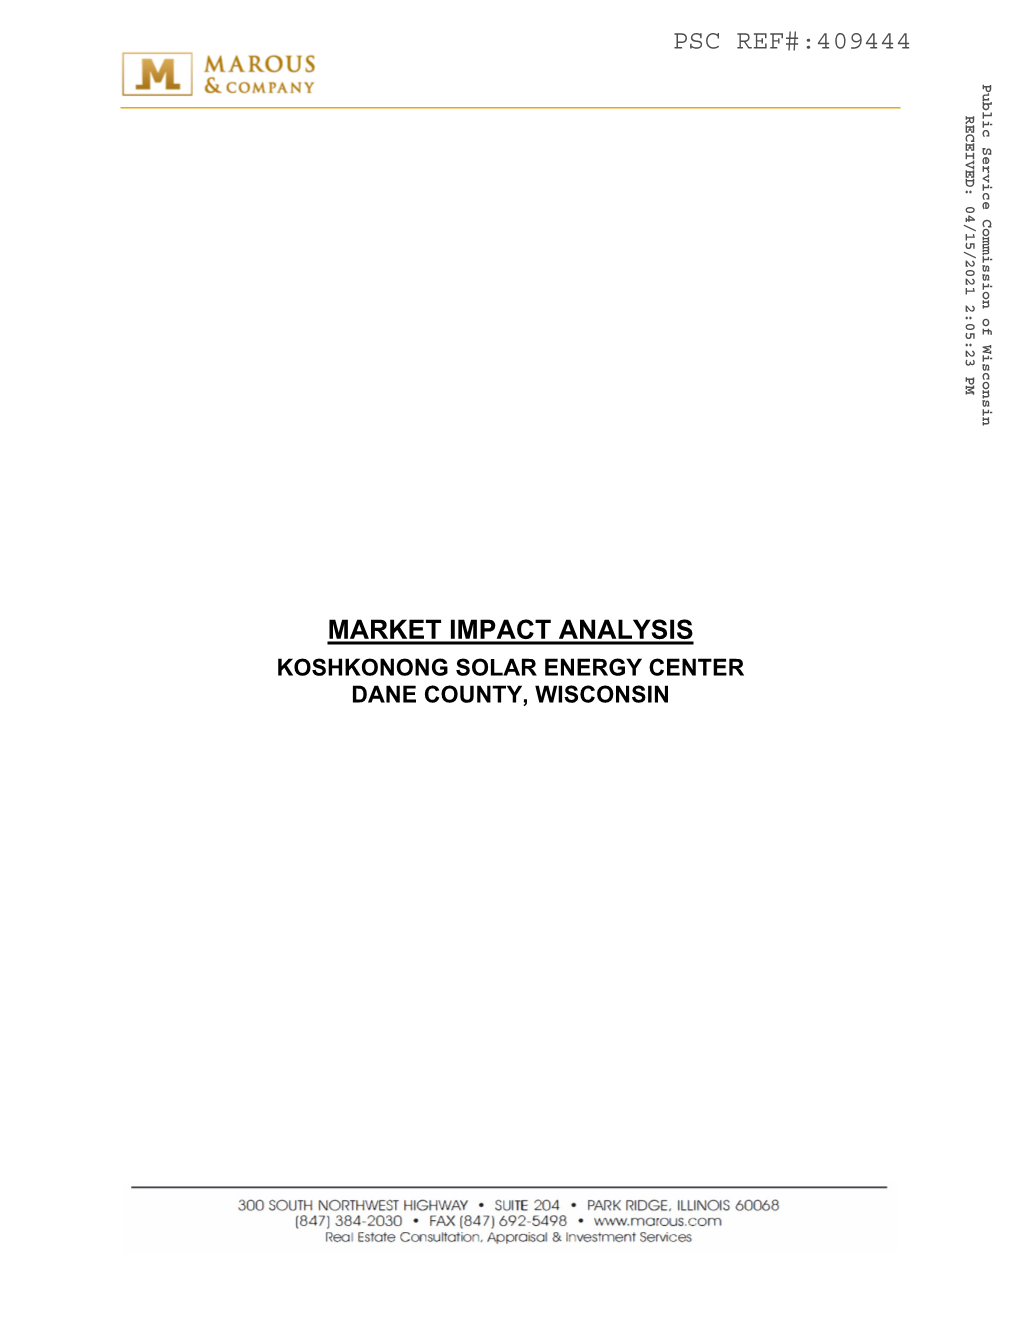 Market Impact Analysis Psc Ref#:409444